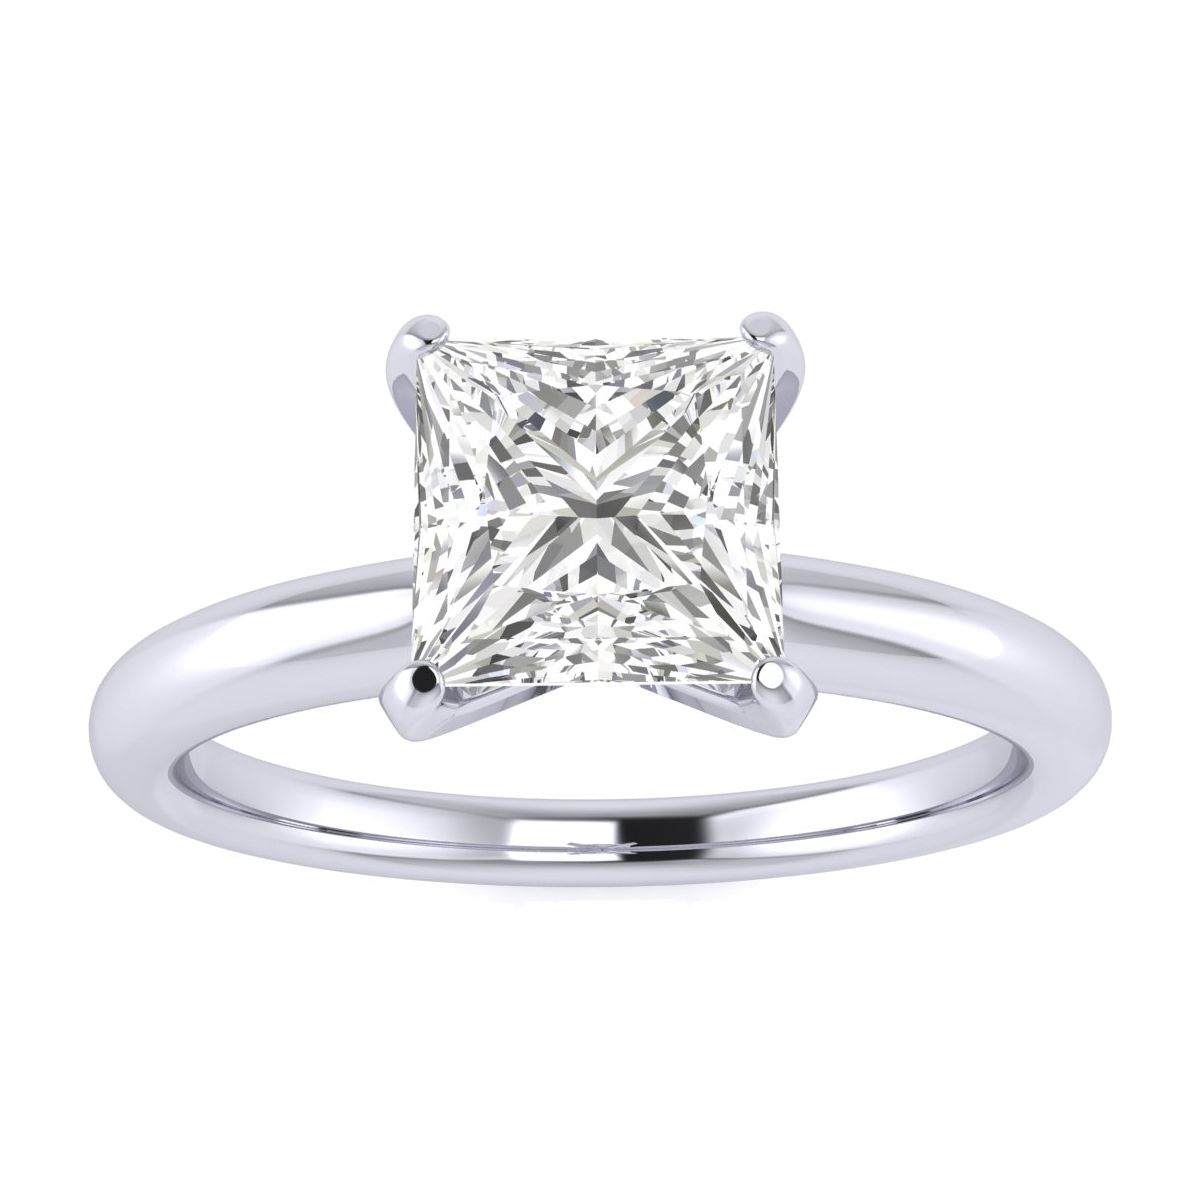 SuperJeweler 1 Carat Princess Cut Diamond Solitaire Engagement Ring In 14K White Gold (I-J I1-I2 Clarity Enhanced)